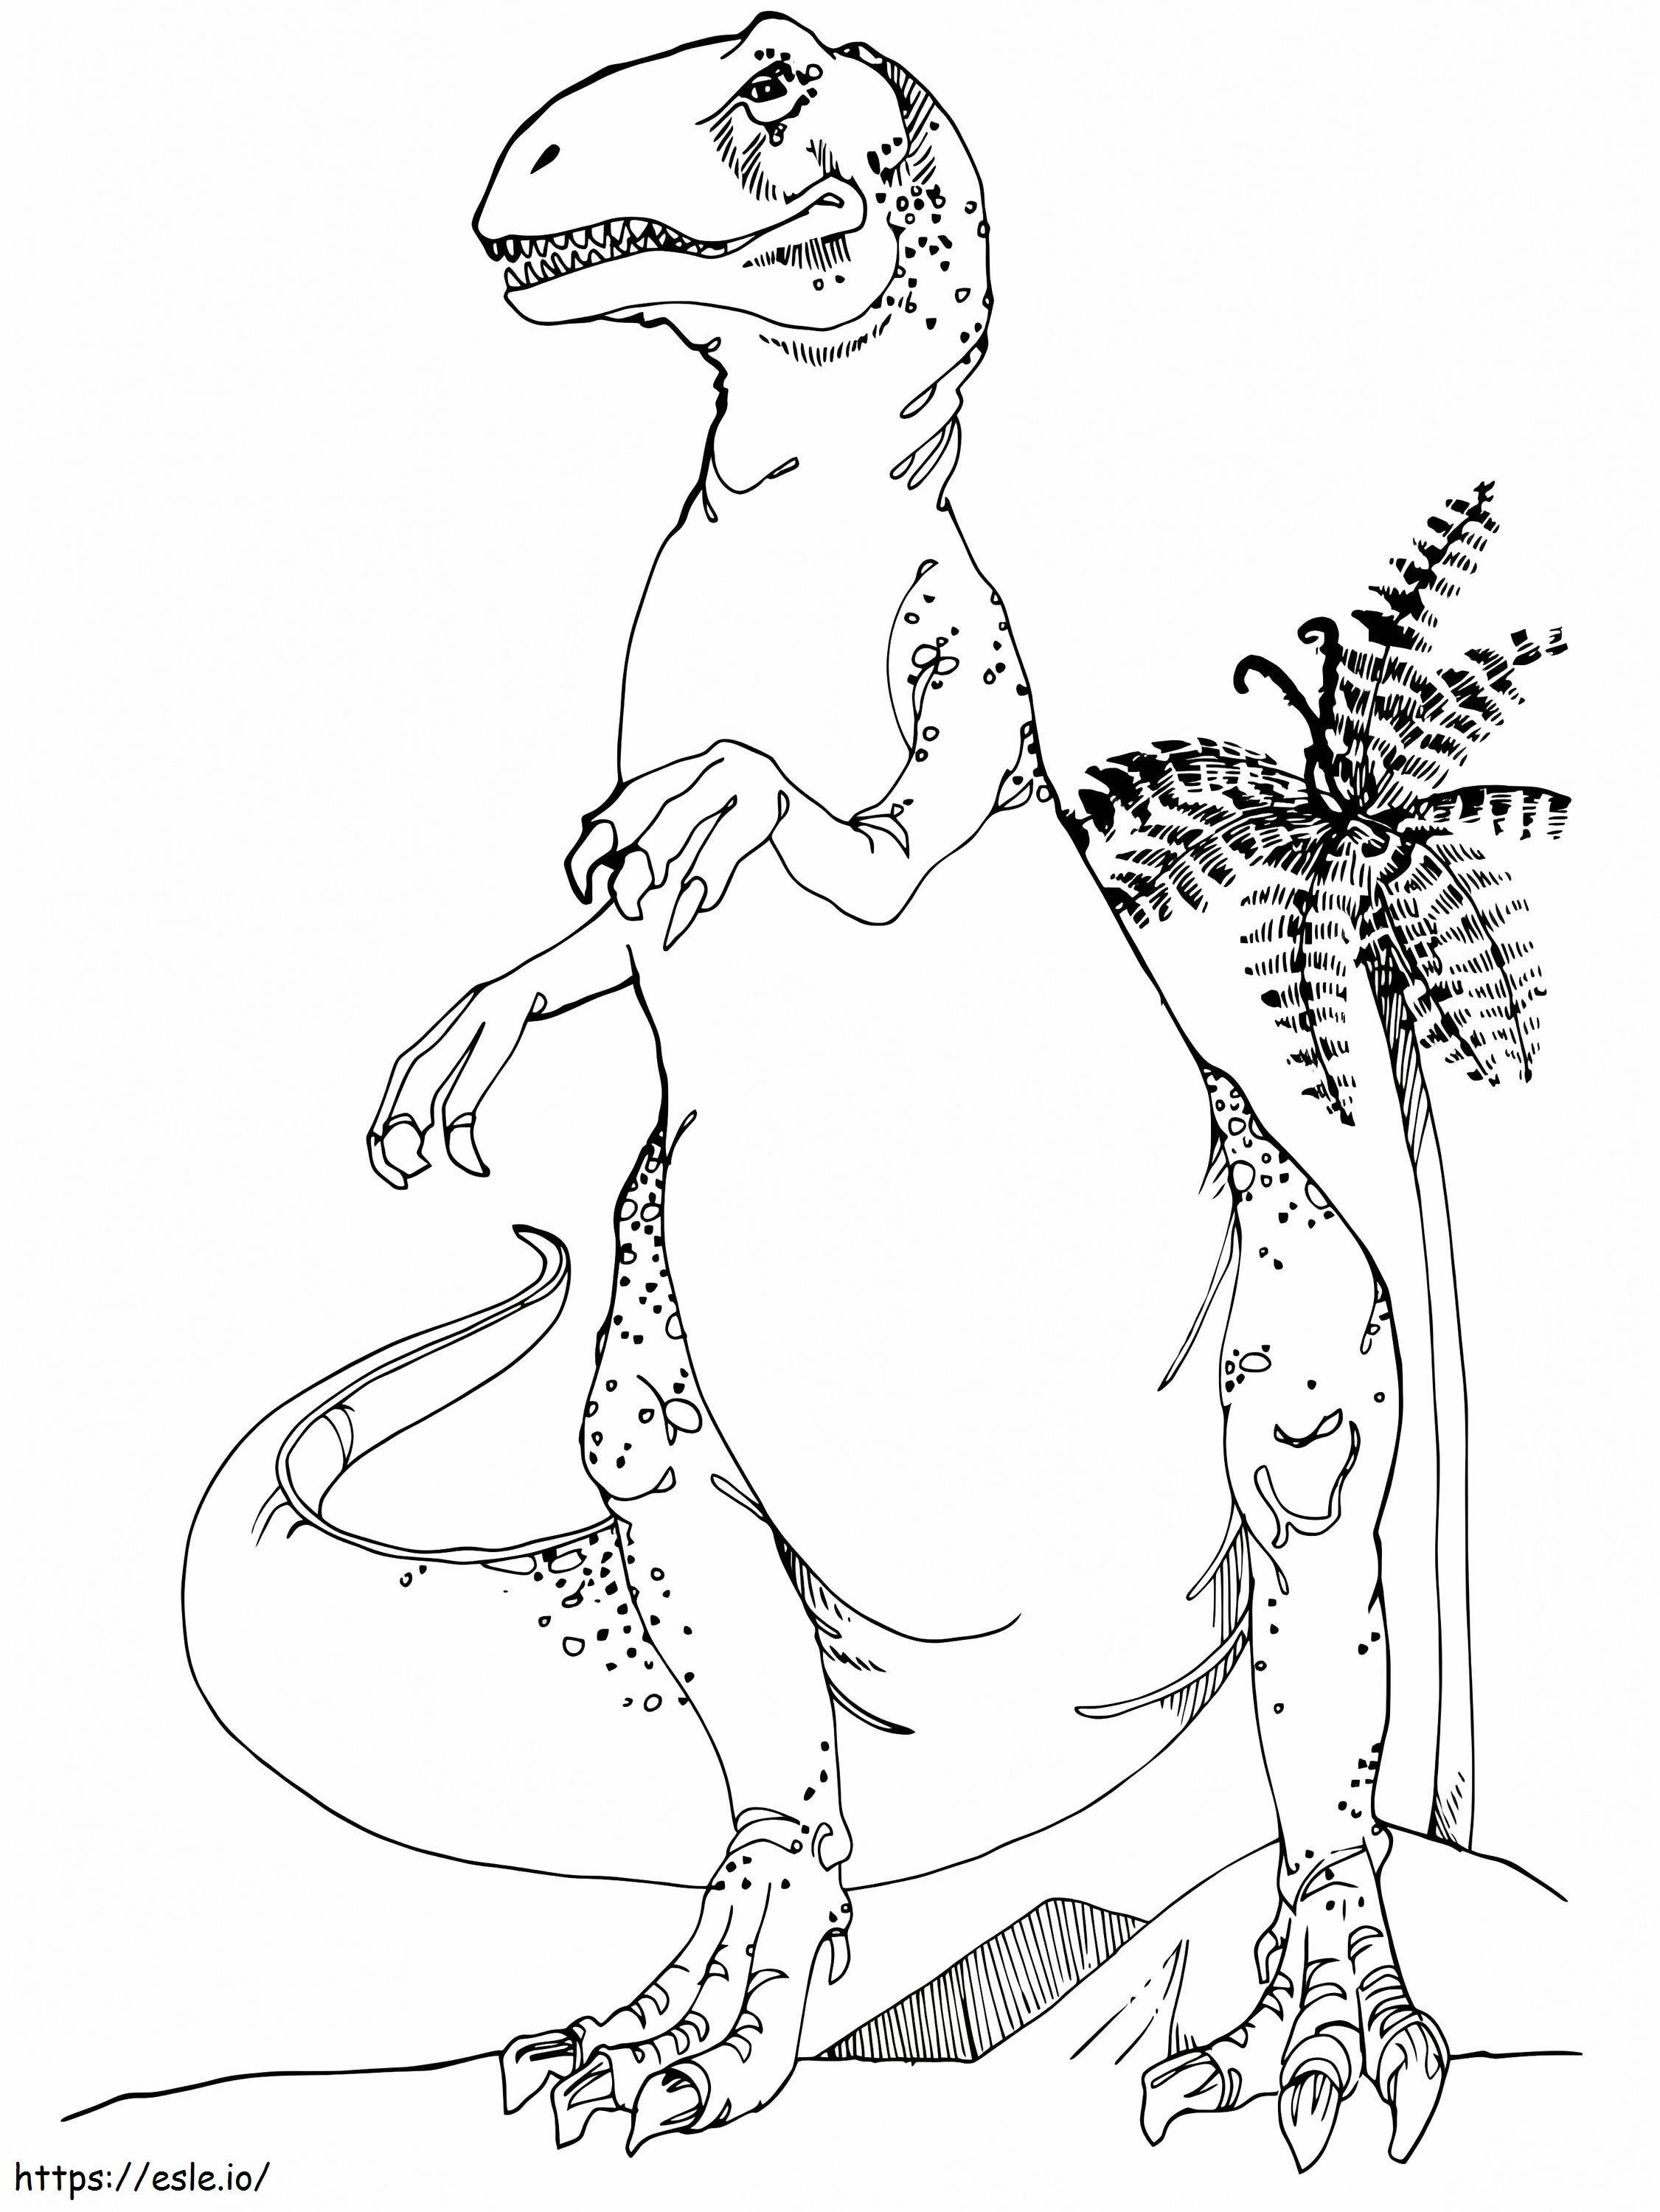 Printable Allosaurus coloring page